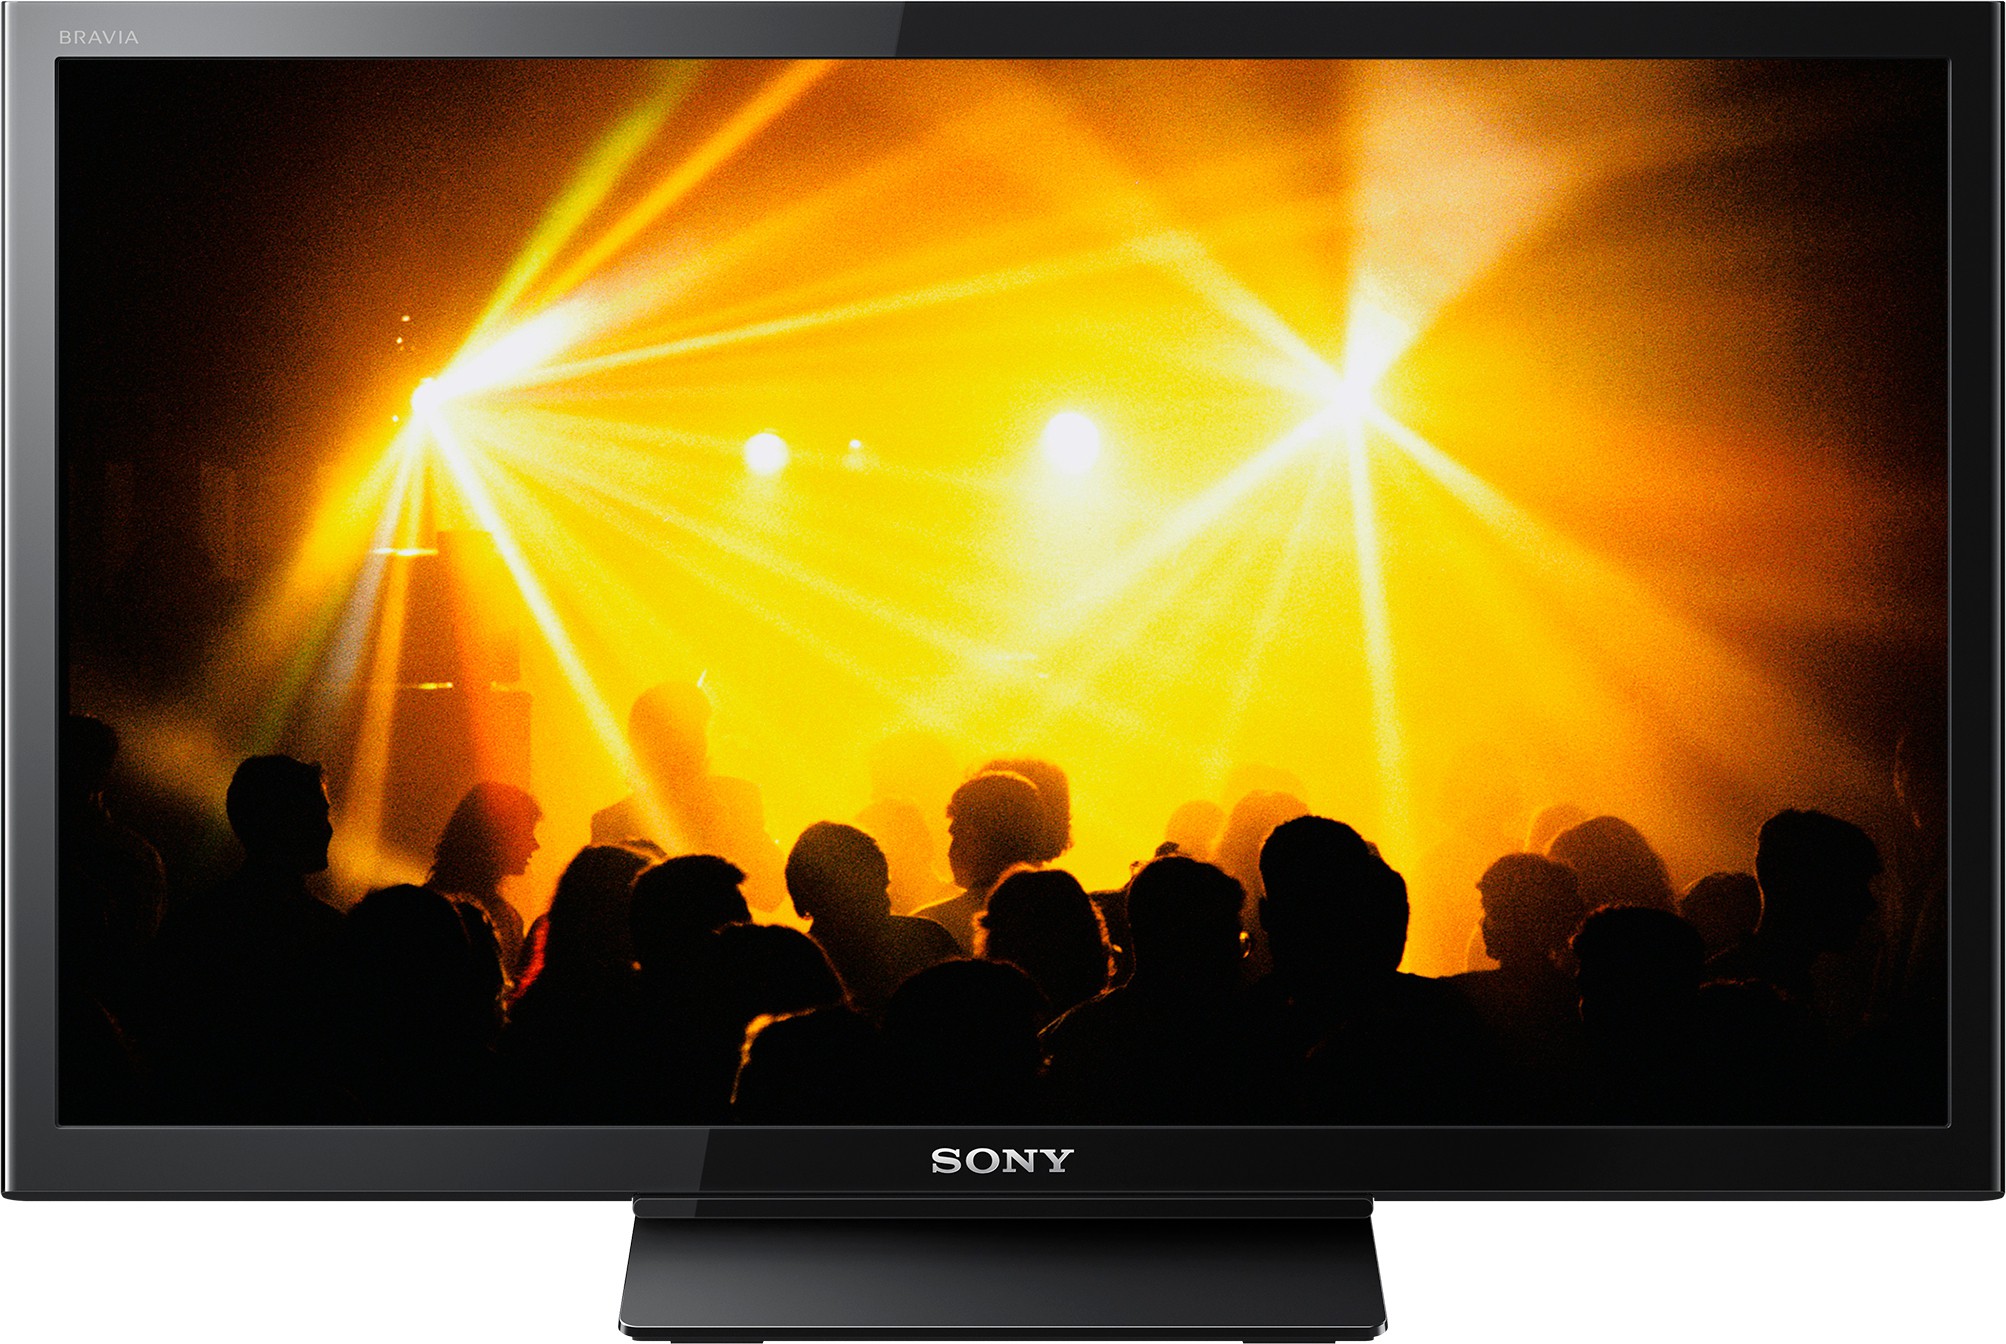 SONY BRAVIA 24 INCH P412C LED TV - AC MART BD : Best Price in